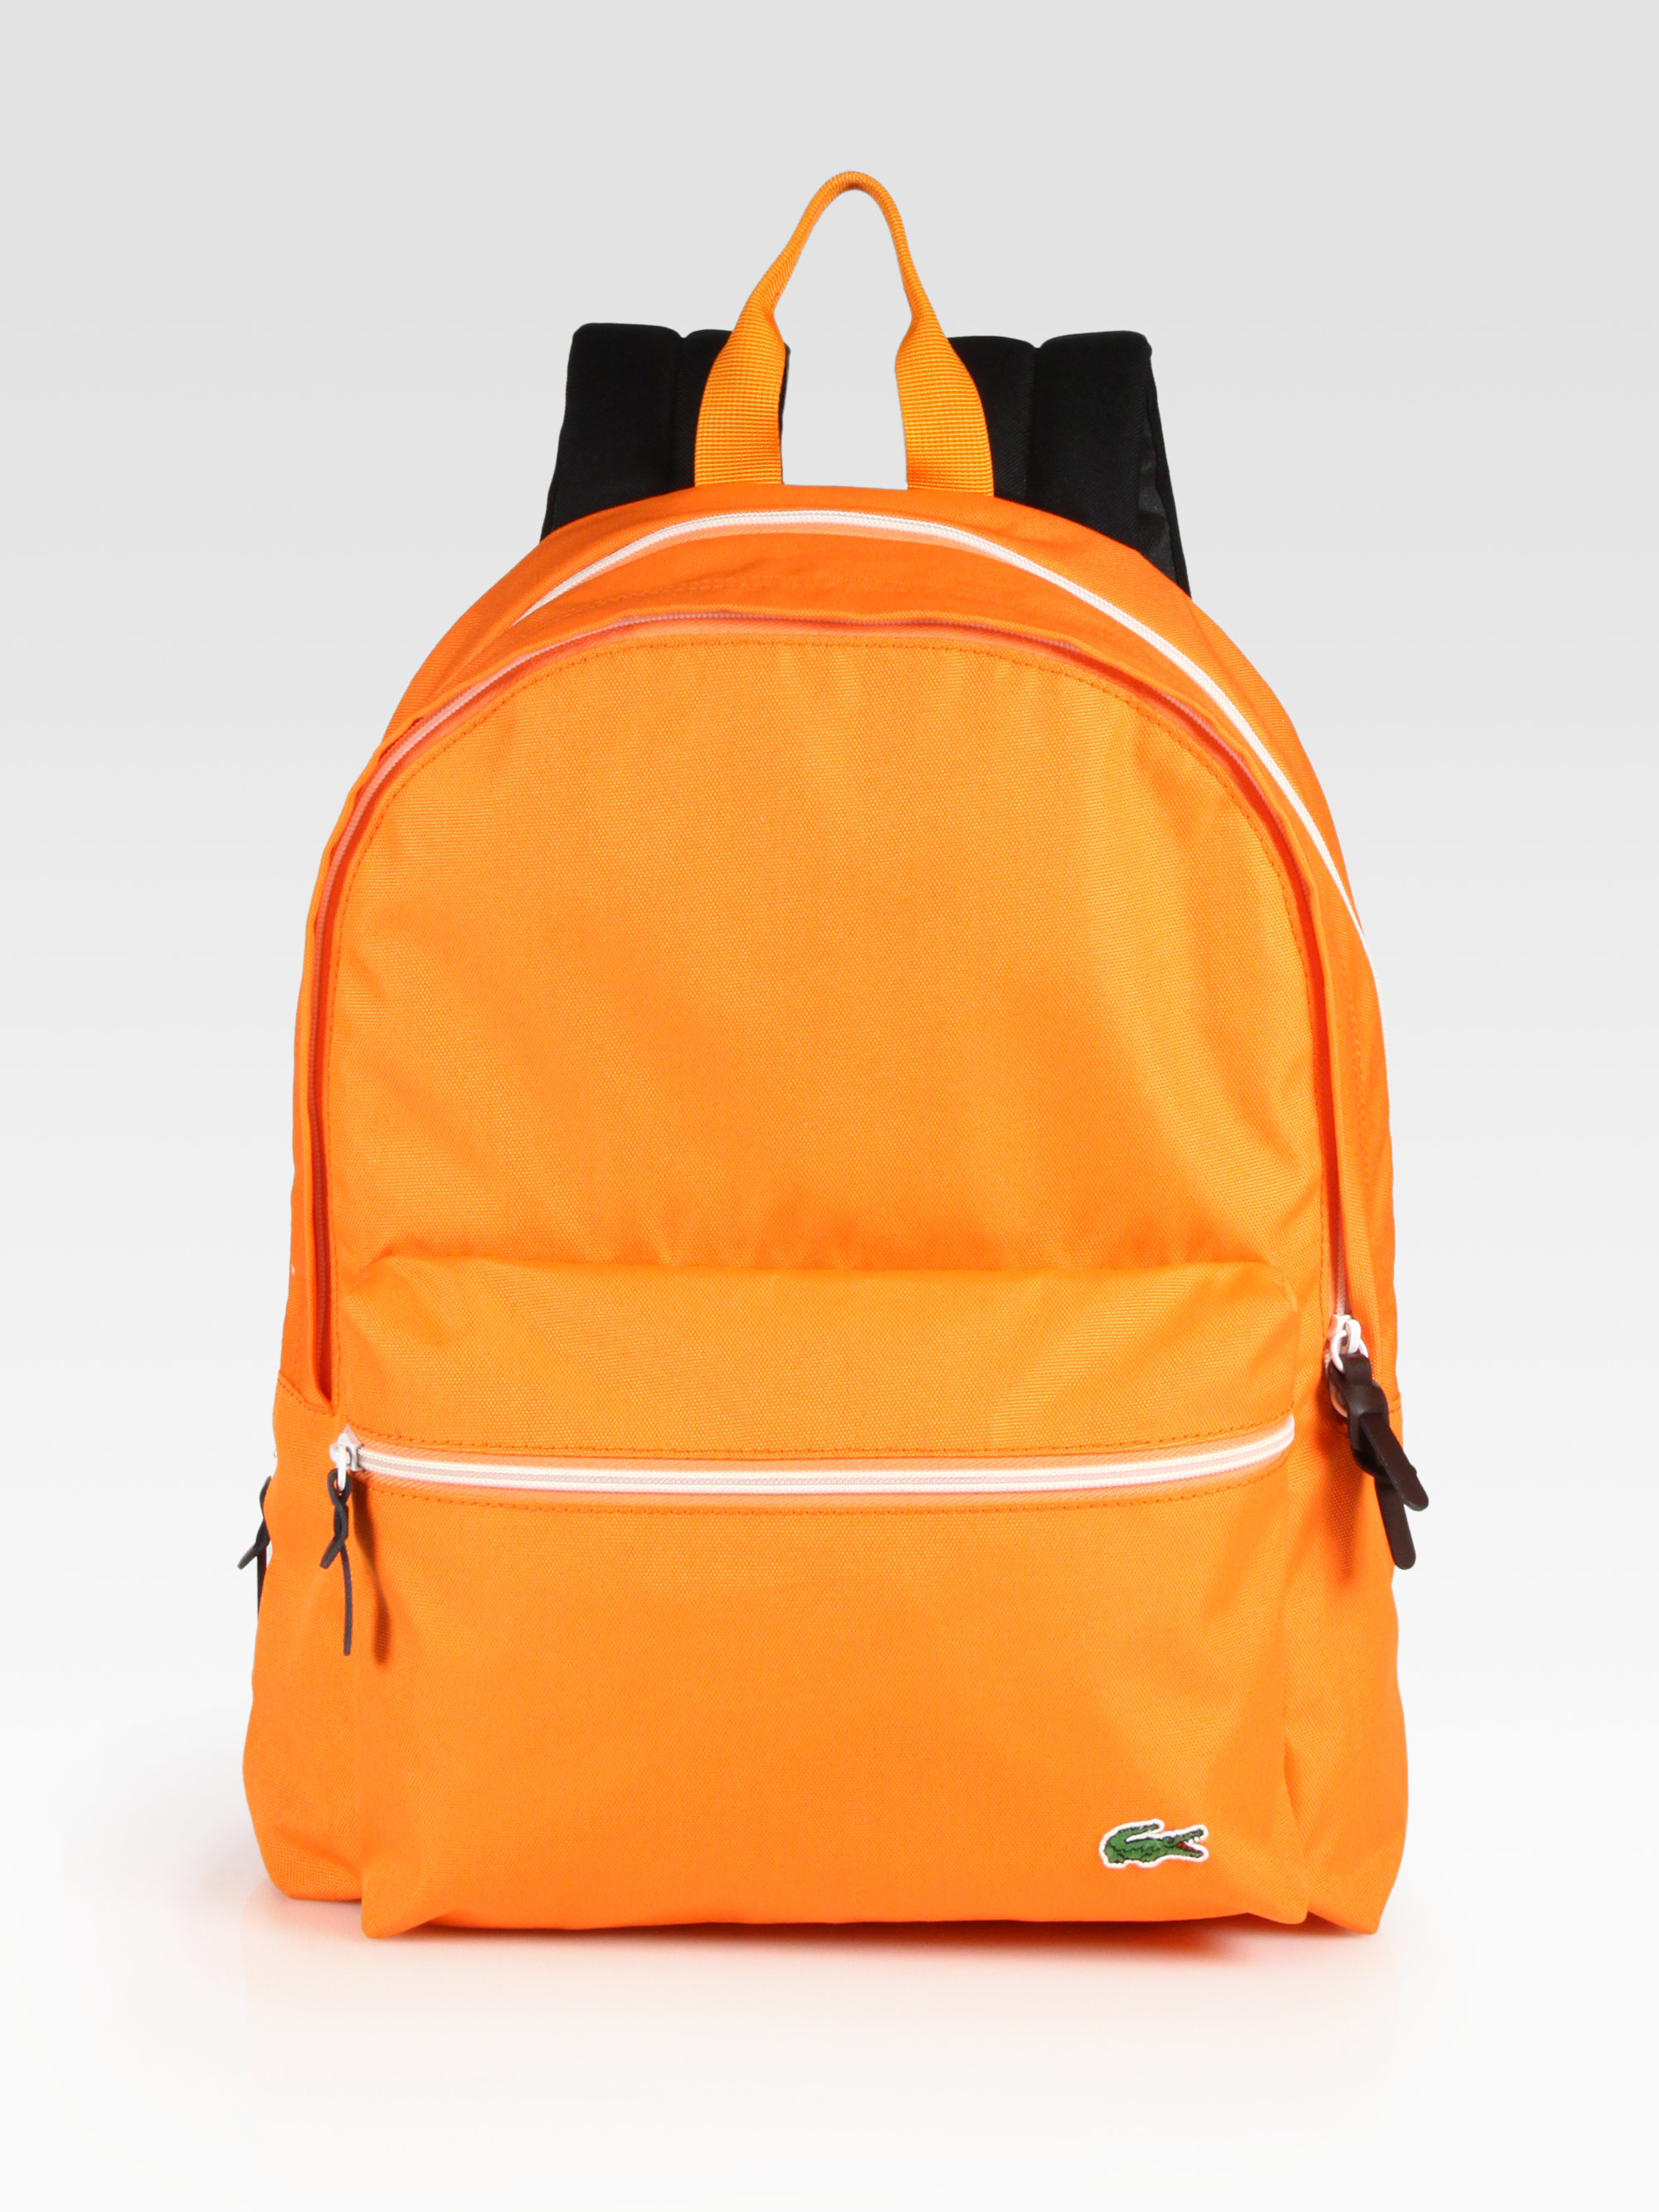 lacoste orange bag